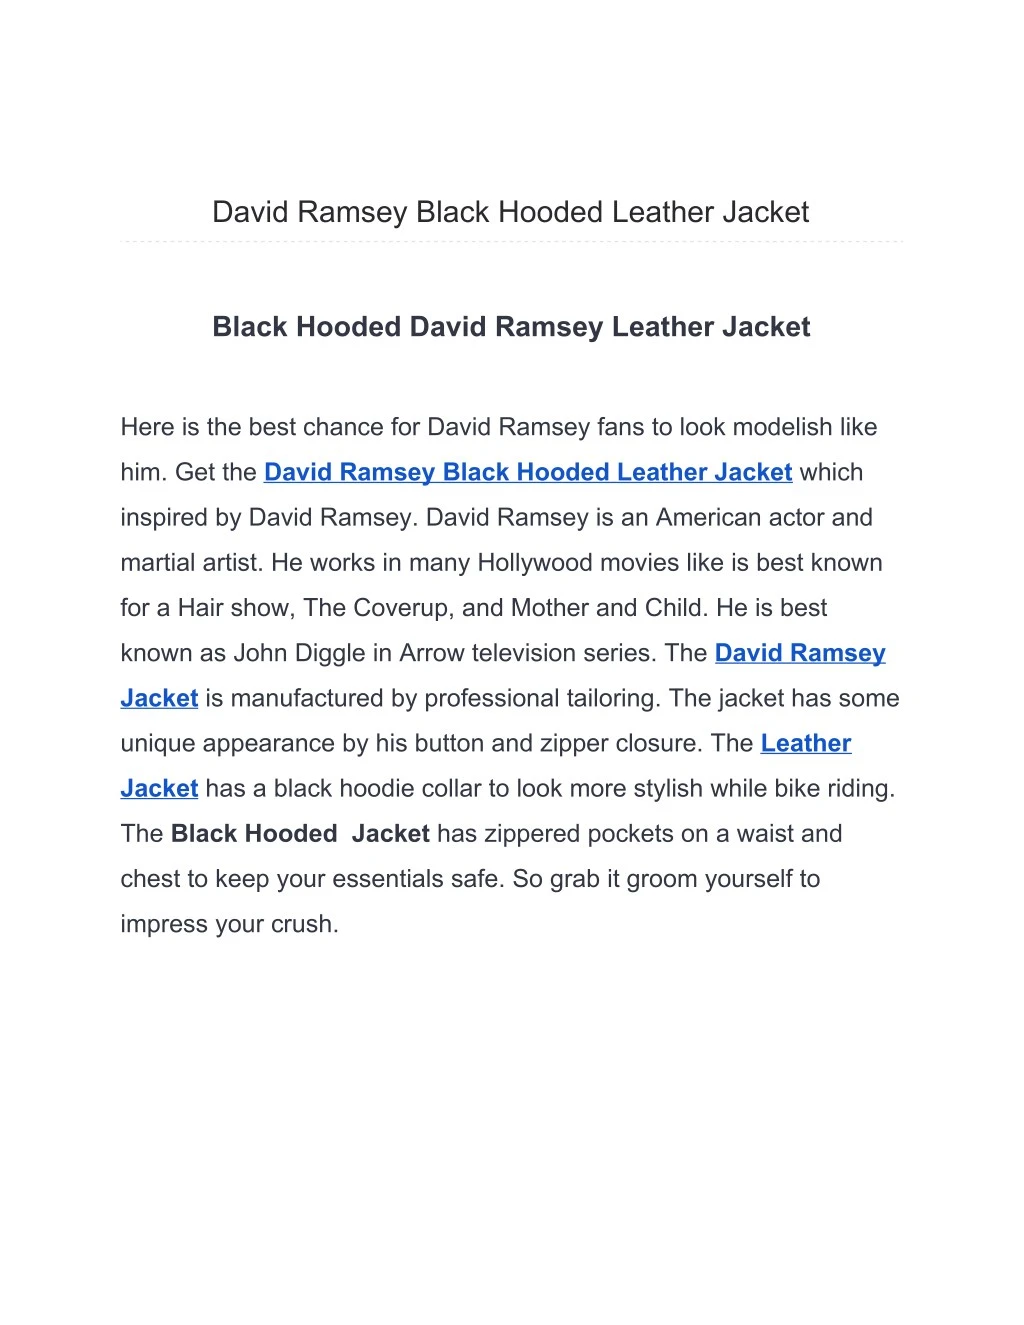 david ramsey black hooded leather jacket